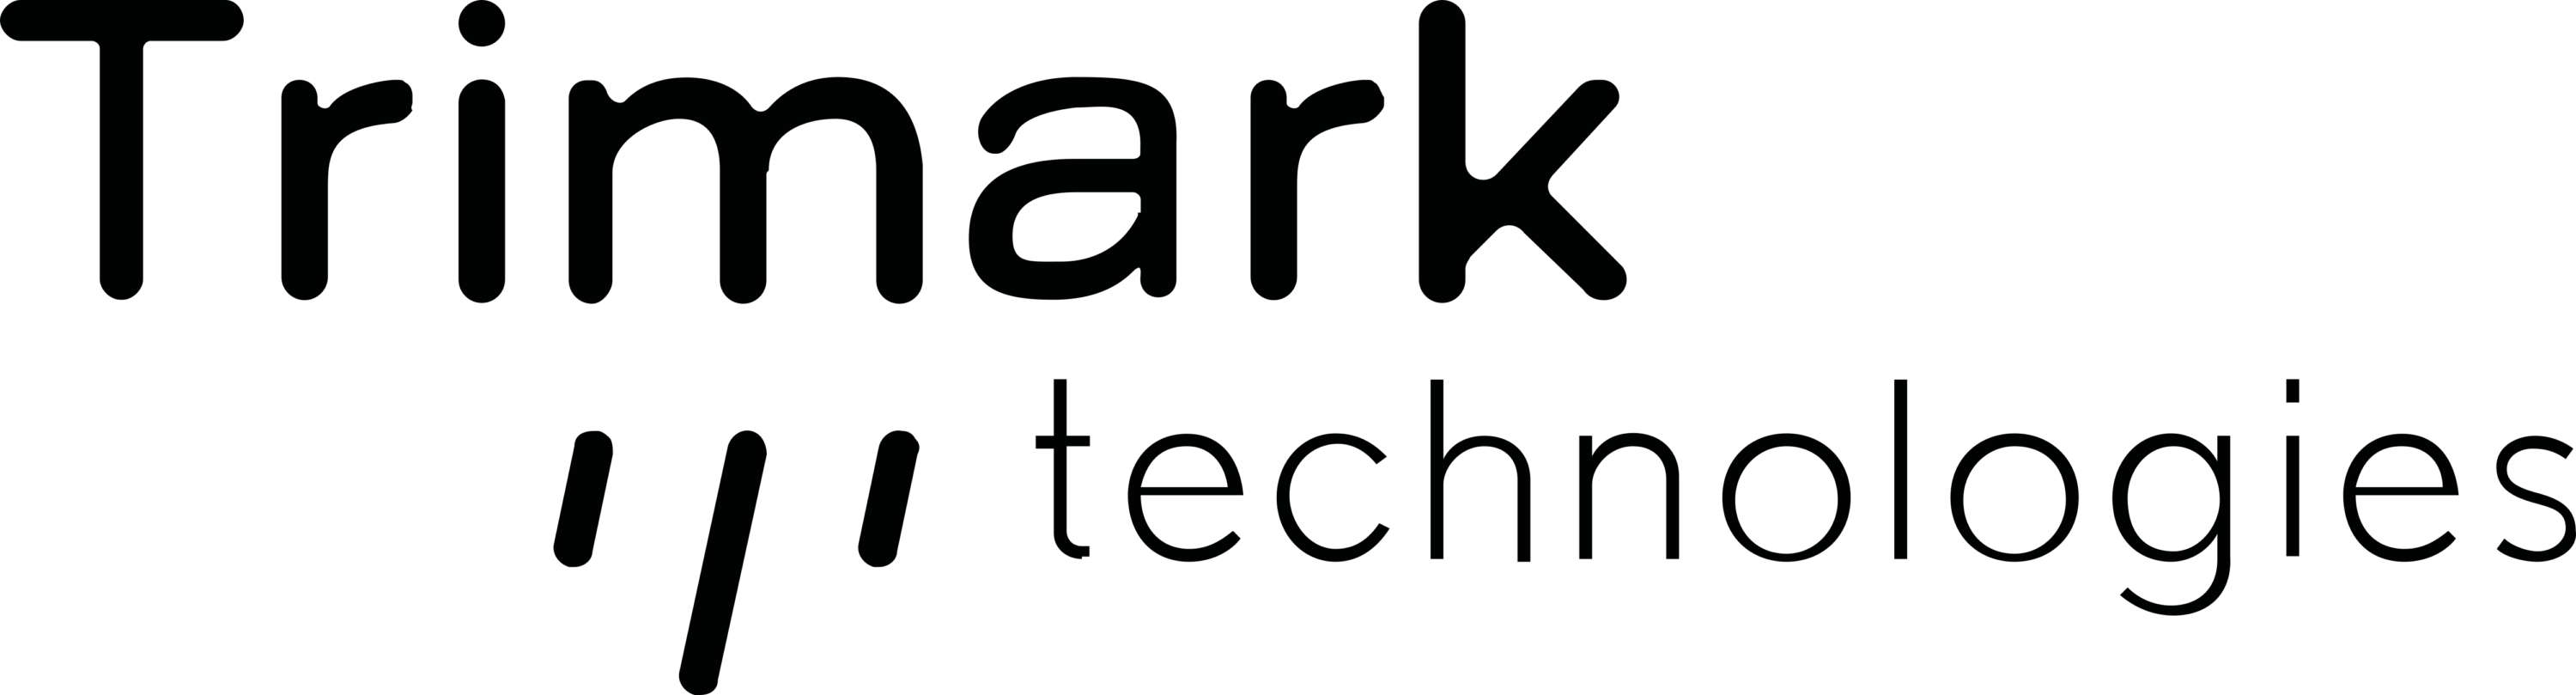 Trimark Technologies Logo